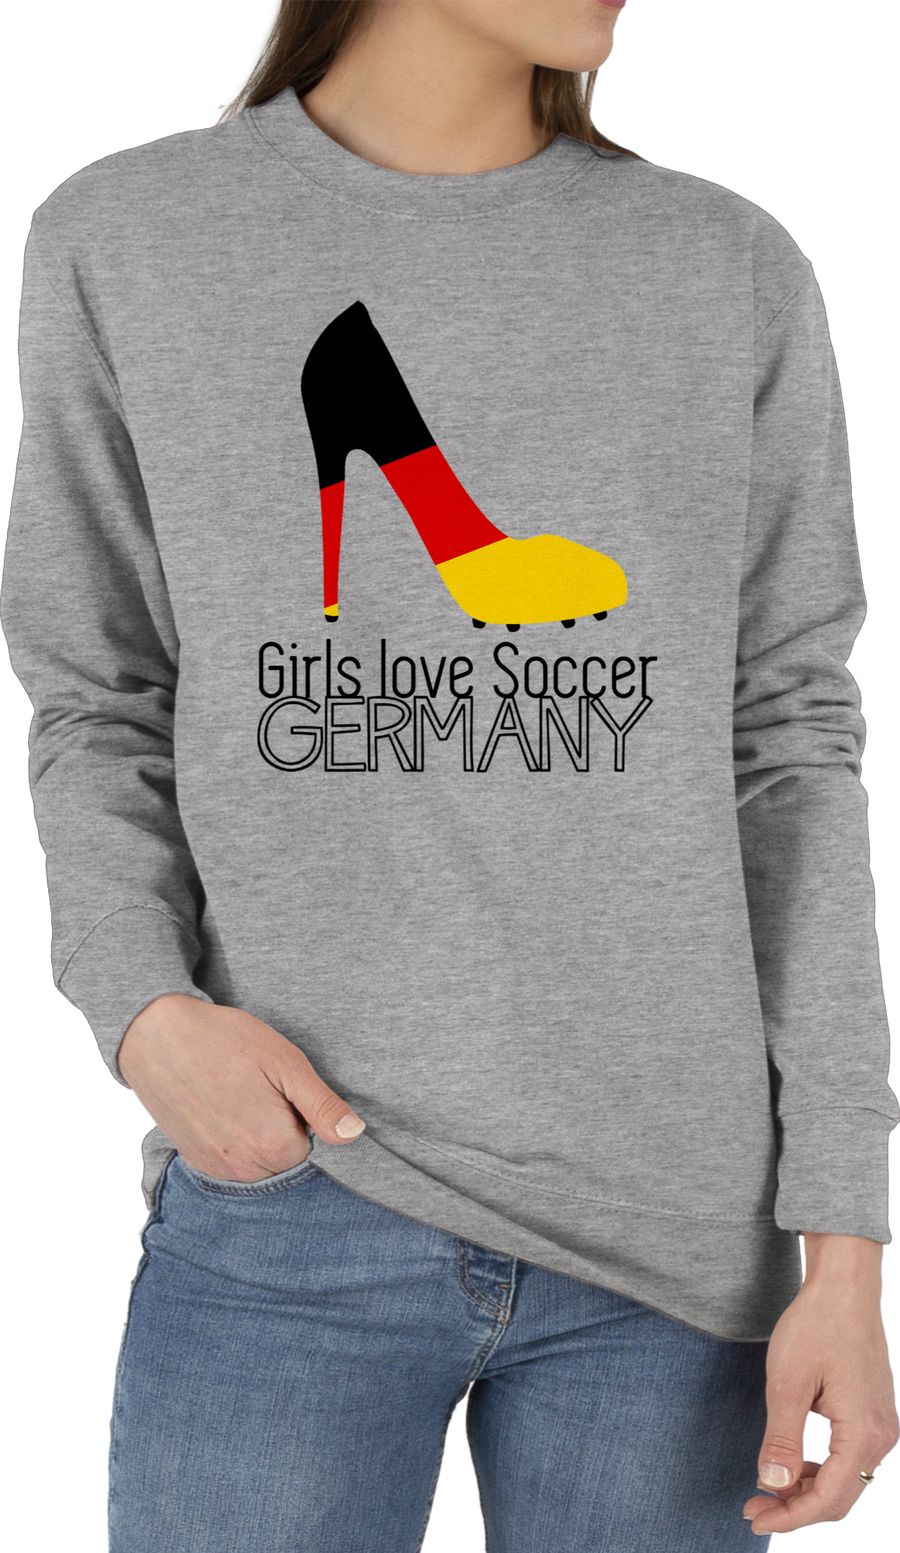 Girls love soccer - Germany